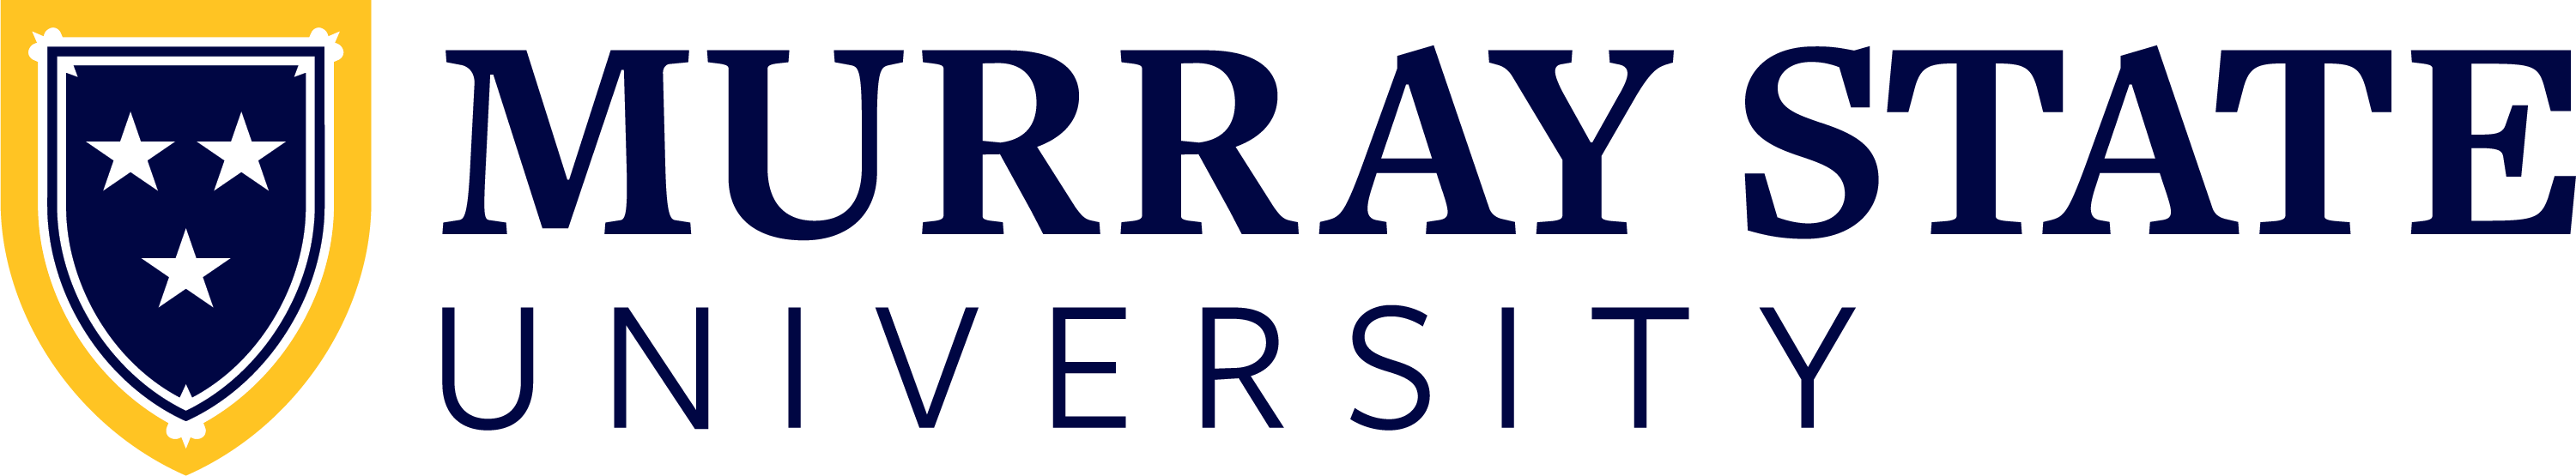 Murray State logo